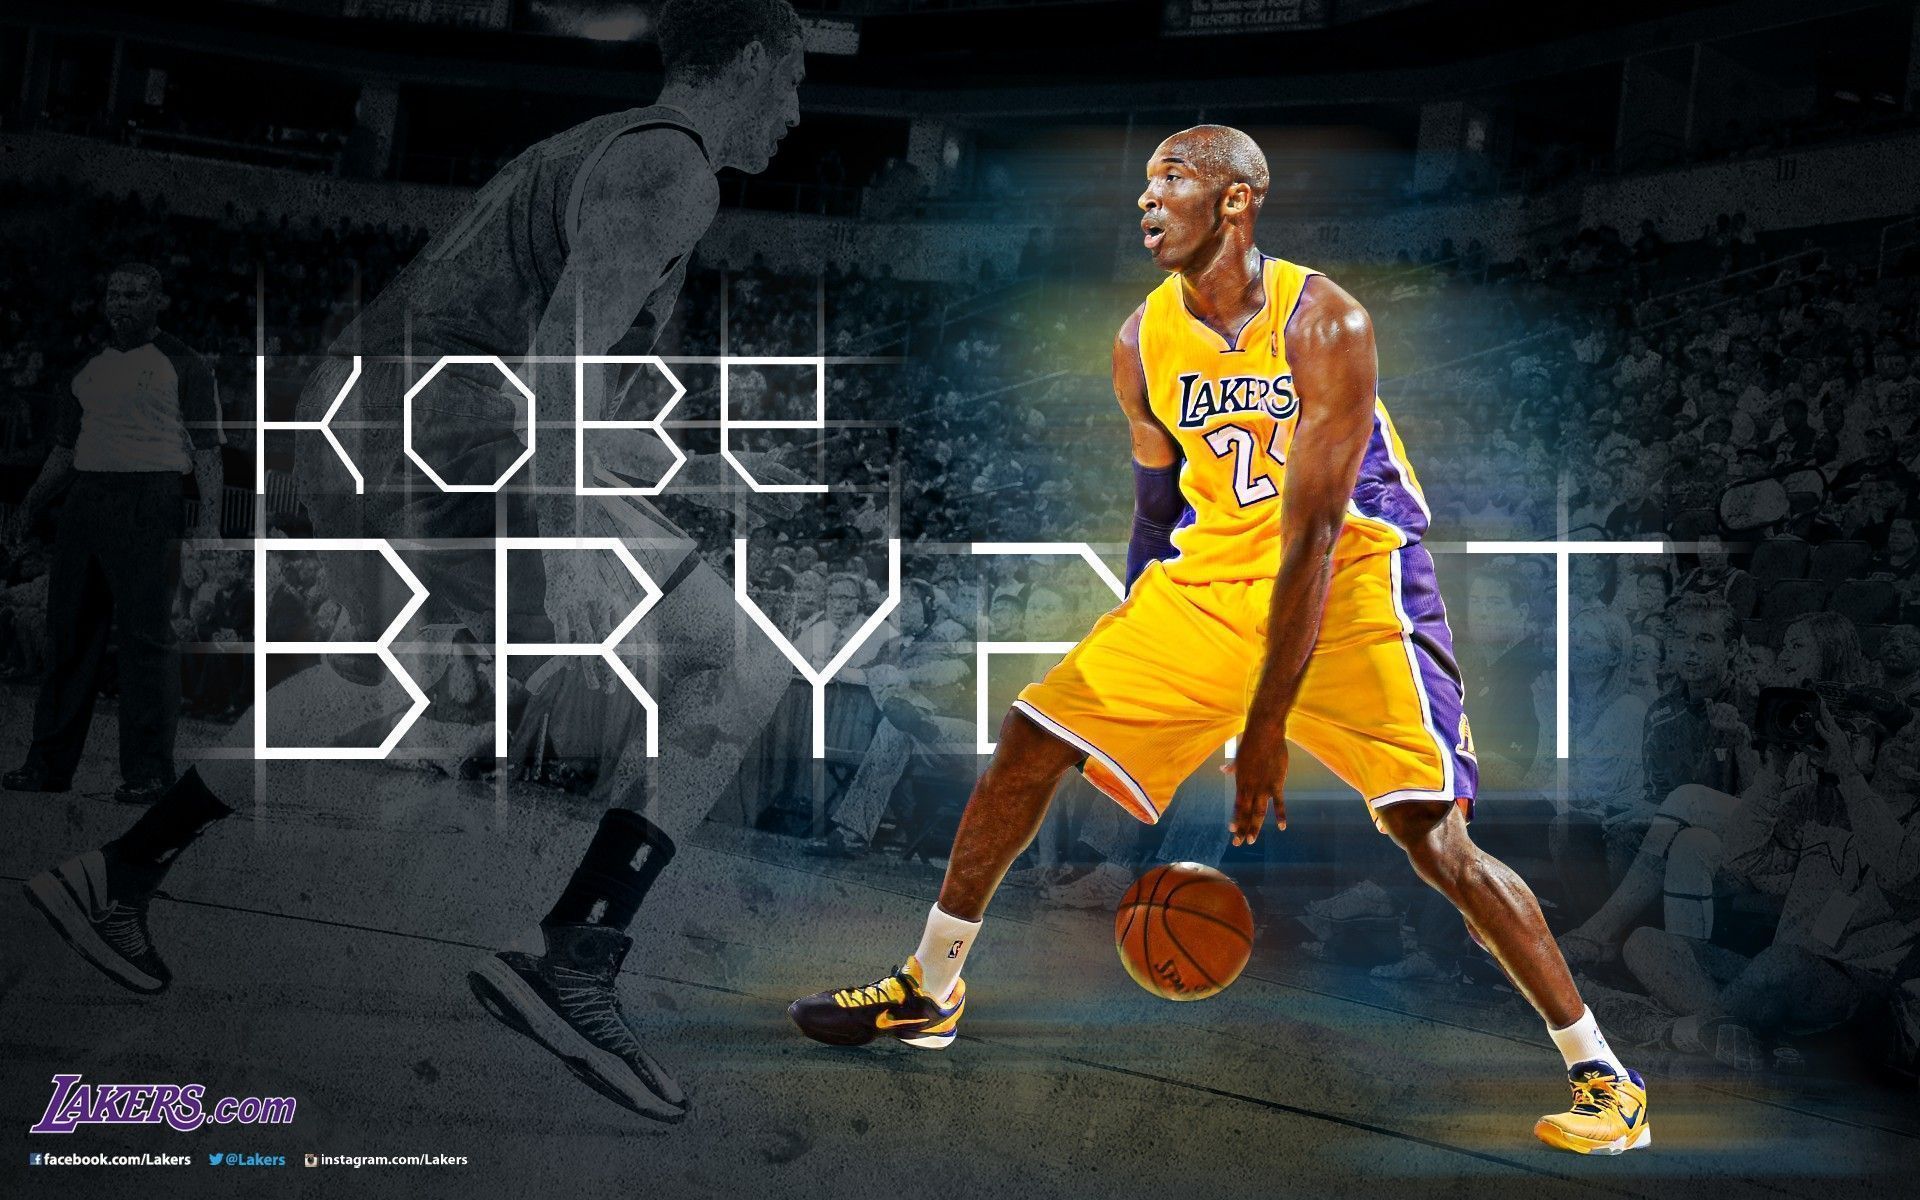 NBA Lakers 2013-14 Windows 8.1 HD Theme | All for Windows 10 Free